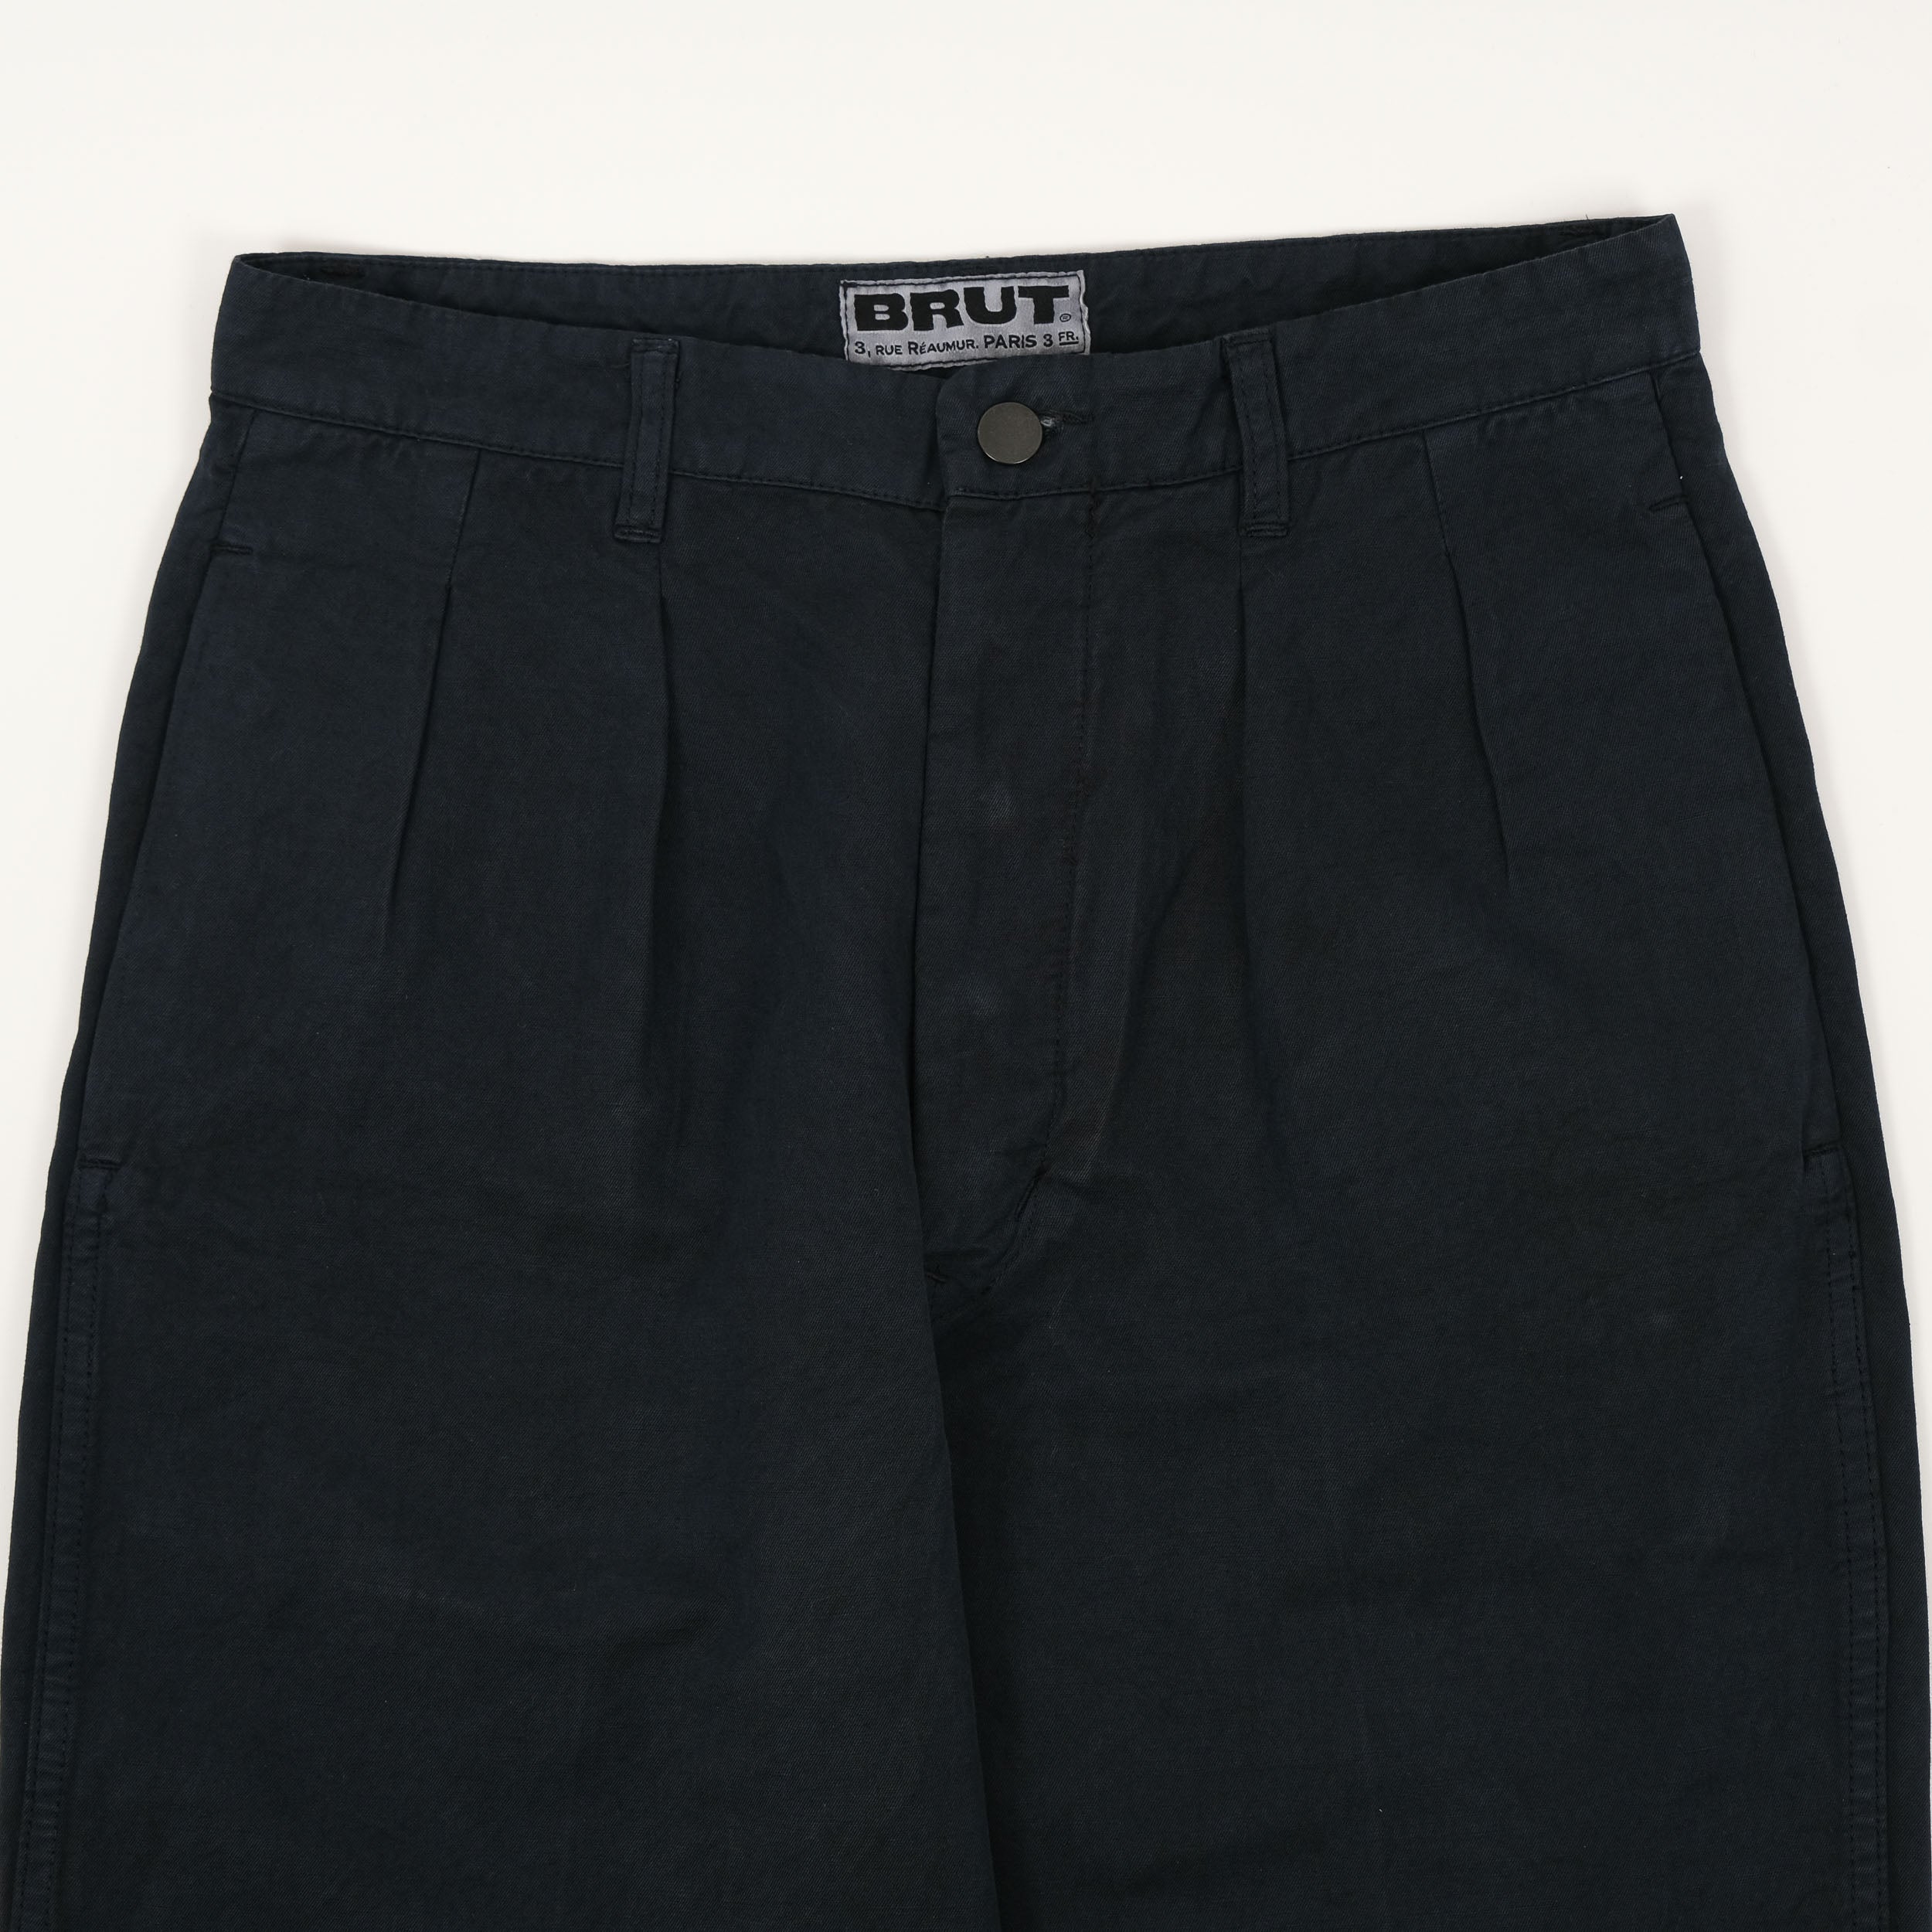 PABLO High Waist Pants | BRUT Vintage Shop | Worldwide shipping ...